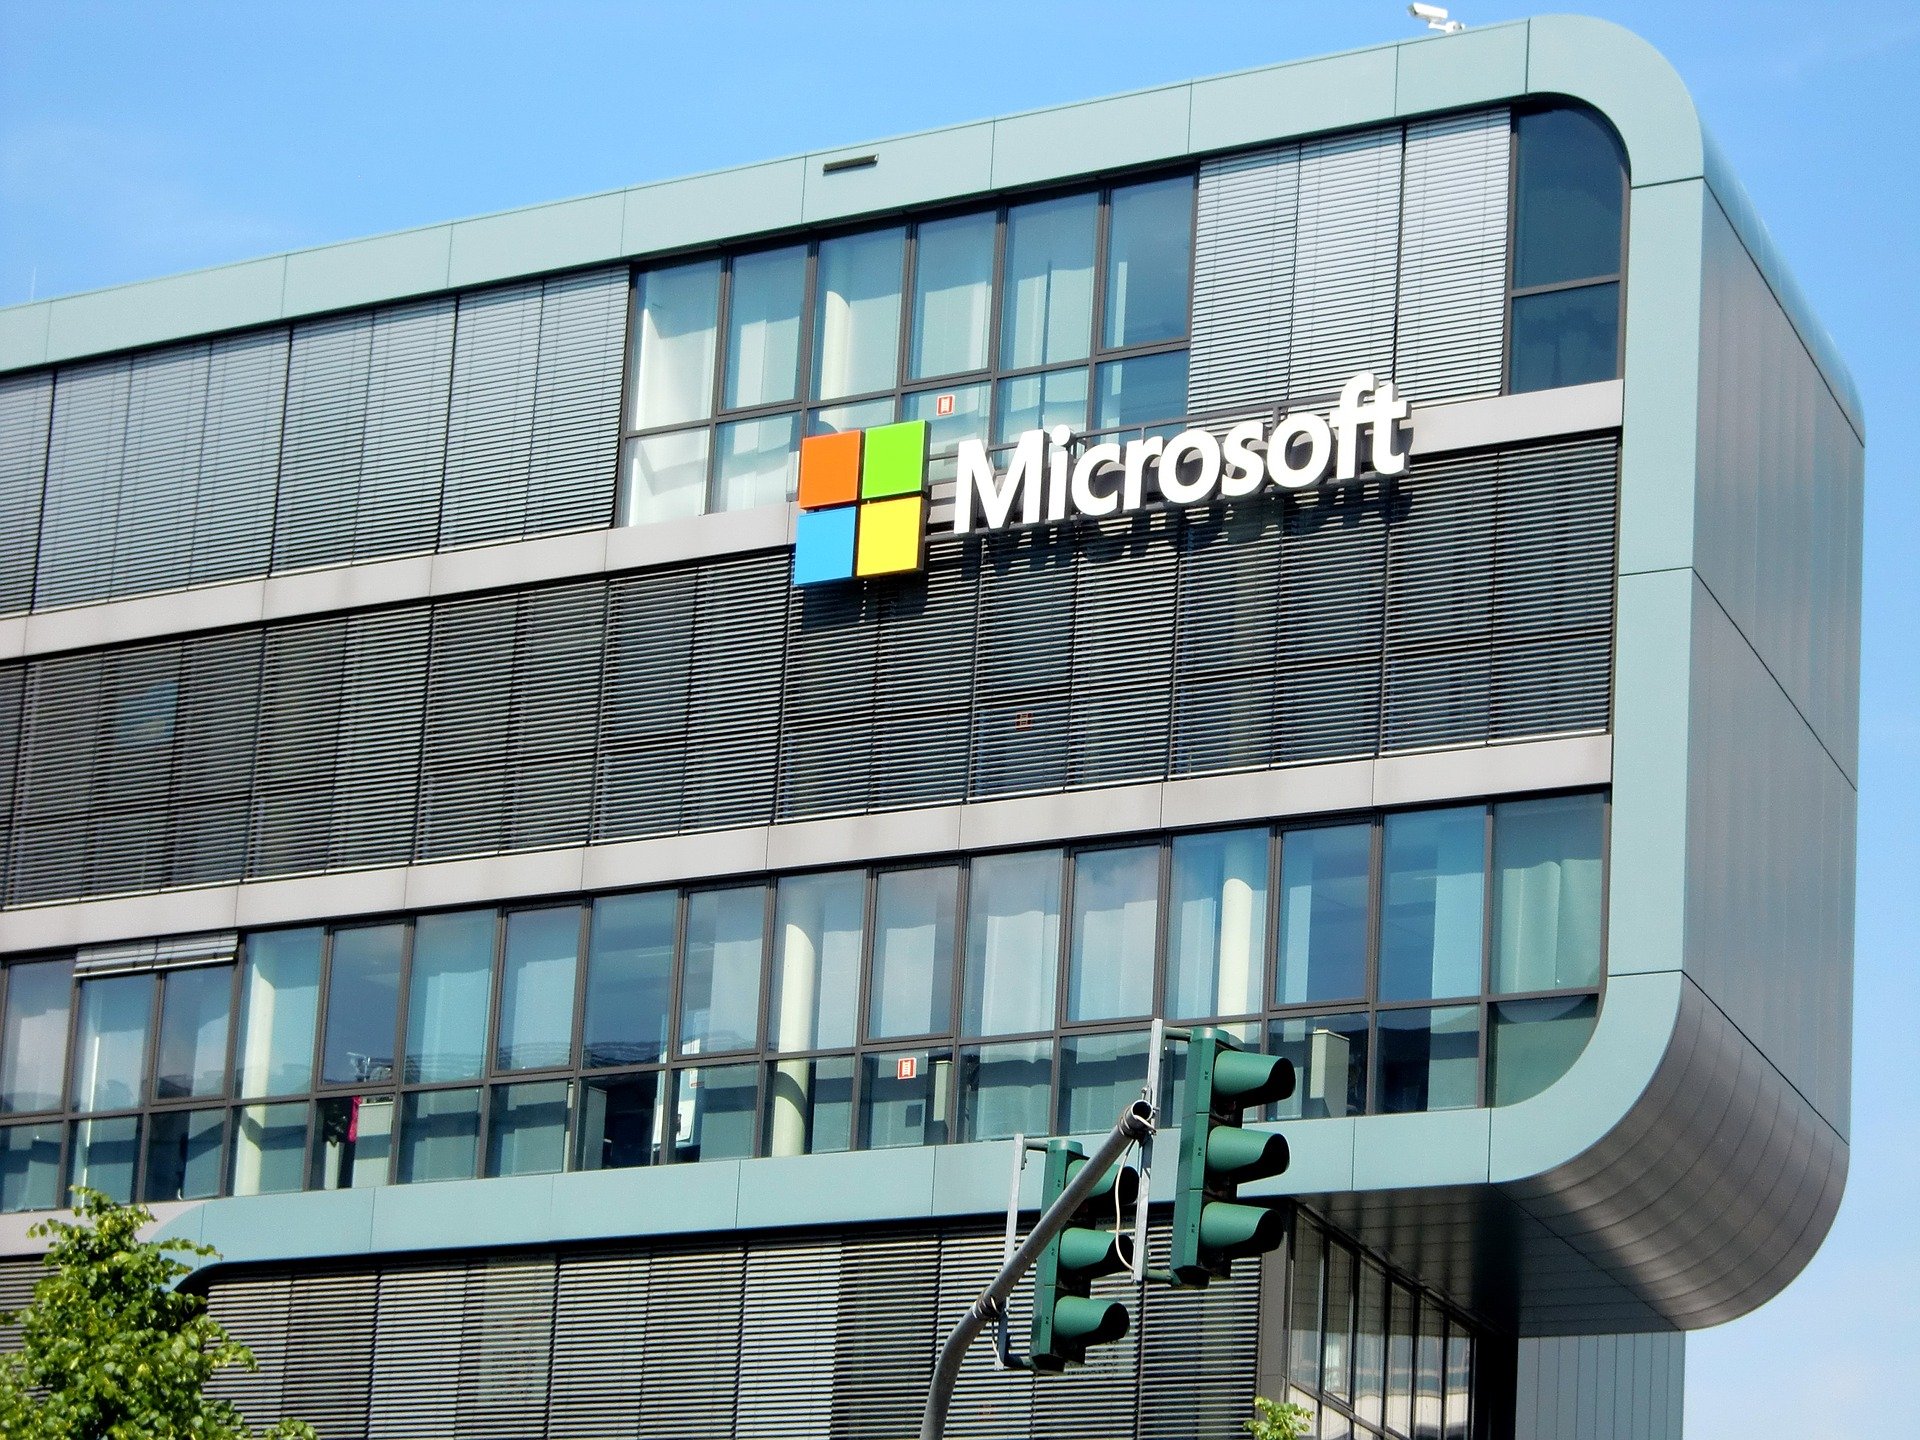 image of Microsoft building across a blue sky